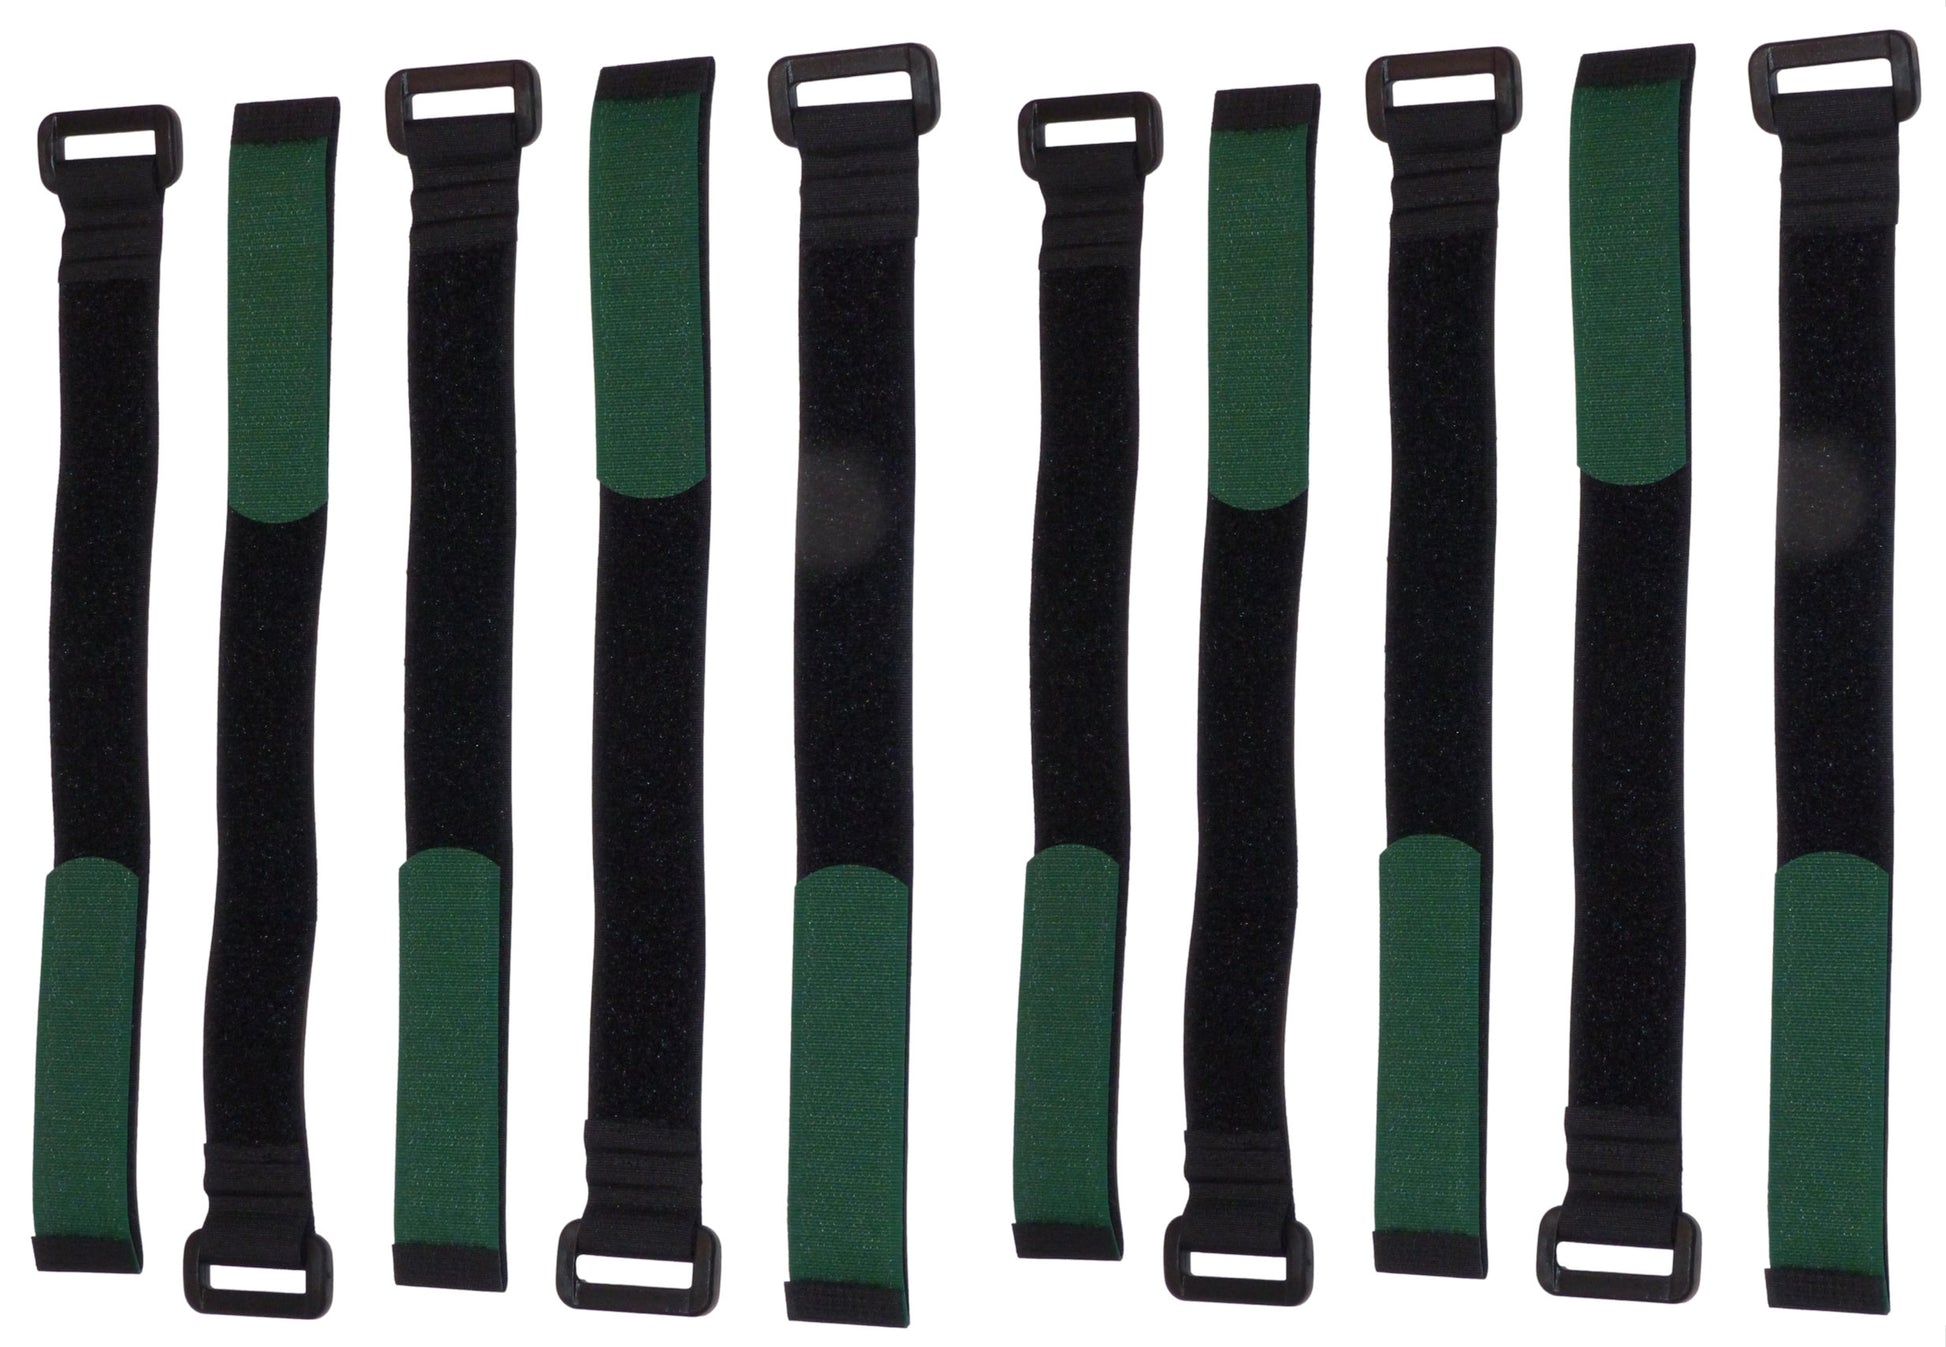 25mm Hook and Loop Cinch Straps in Black, Green End (Pack of 10)